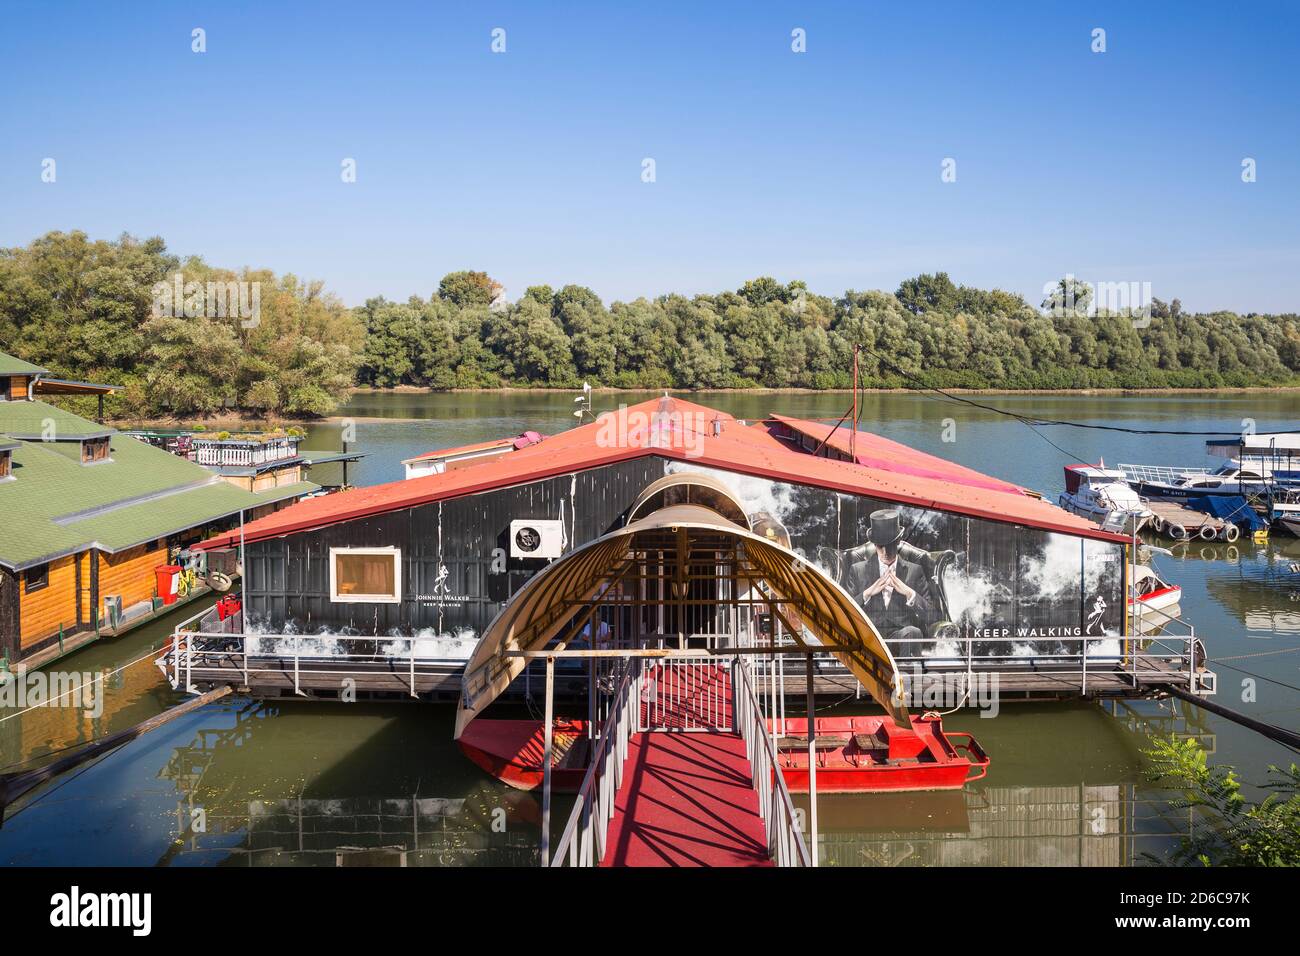 Serbia, Belgrade, Floating restaurant/bars on the Danube River Stock Photo